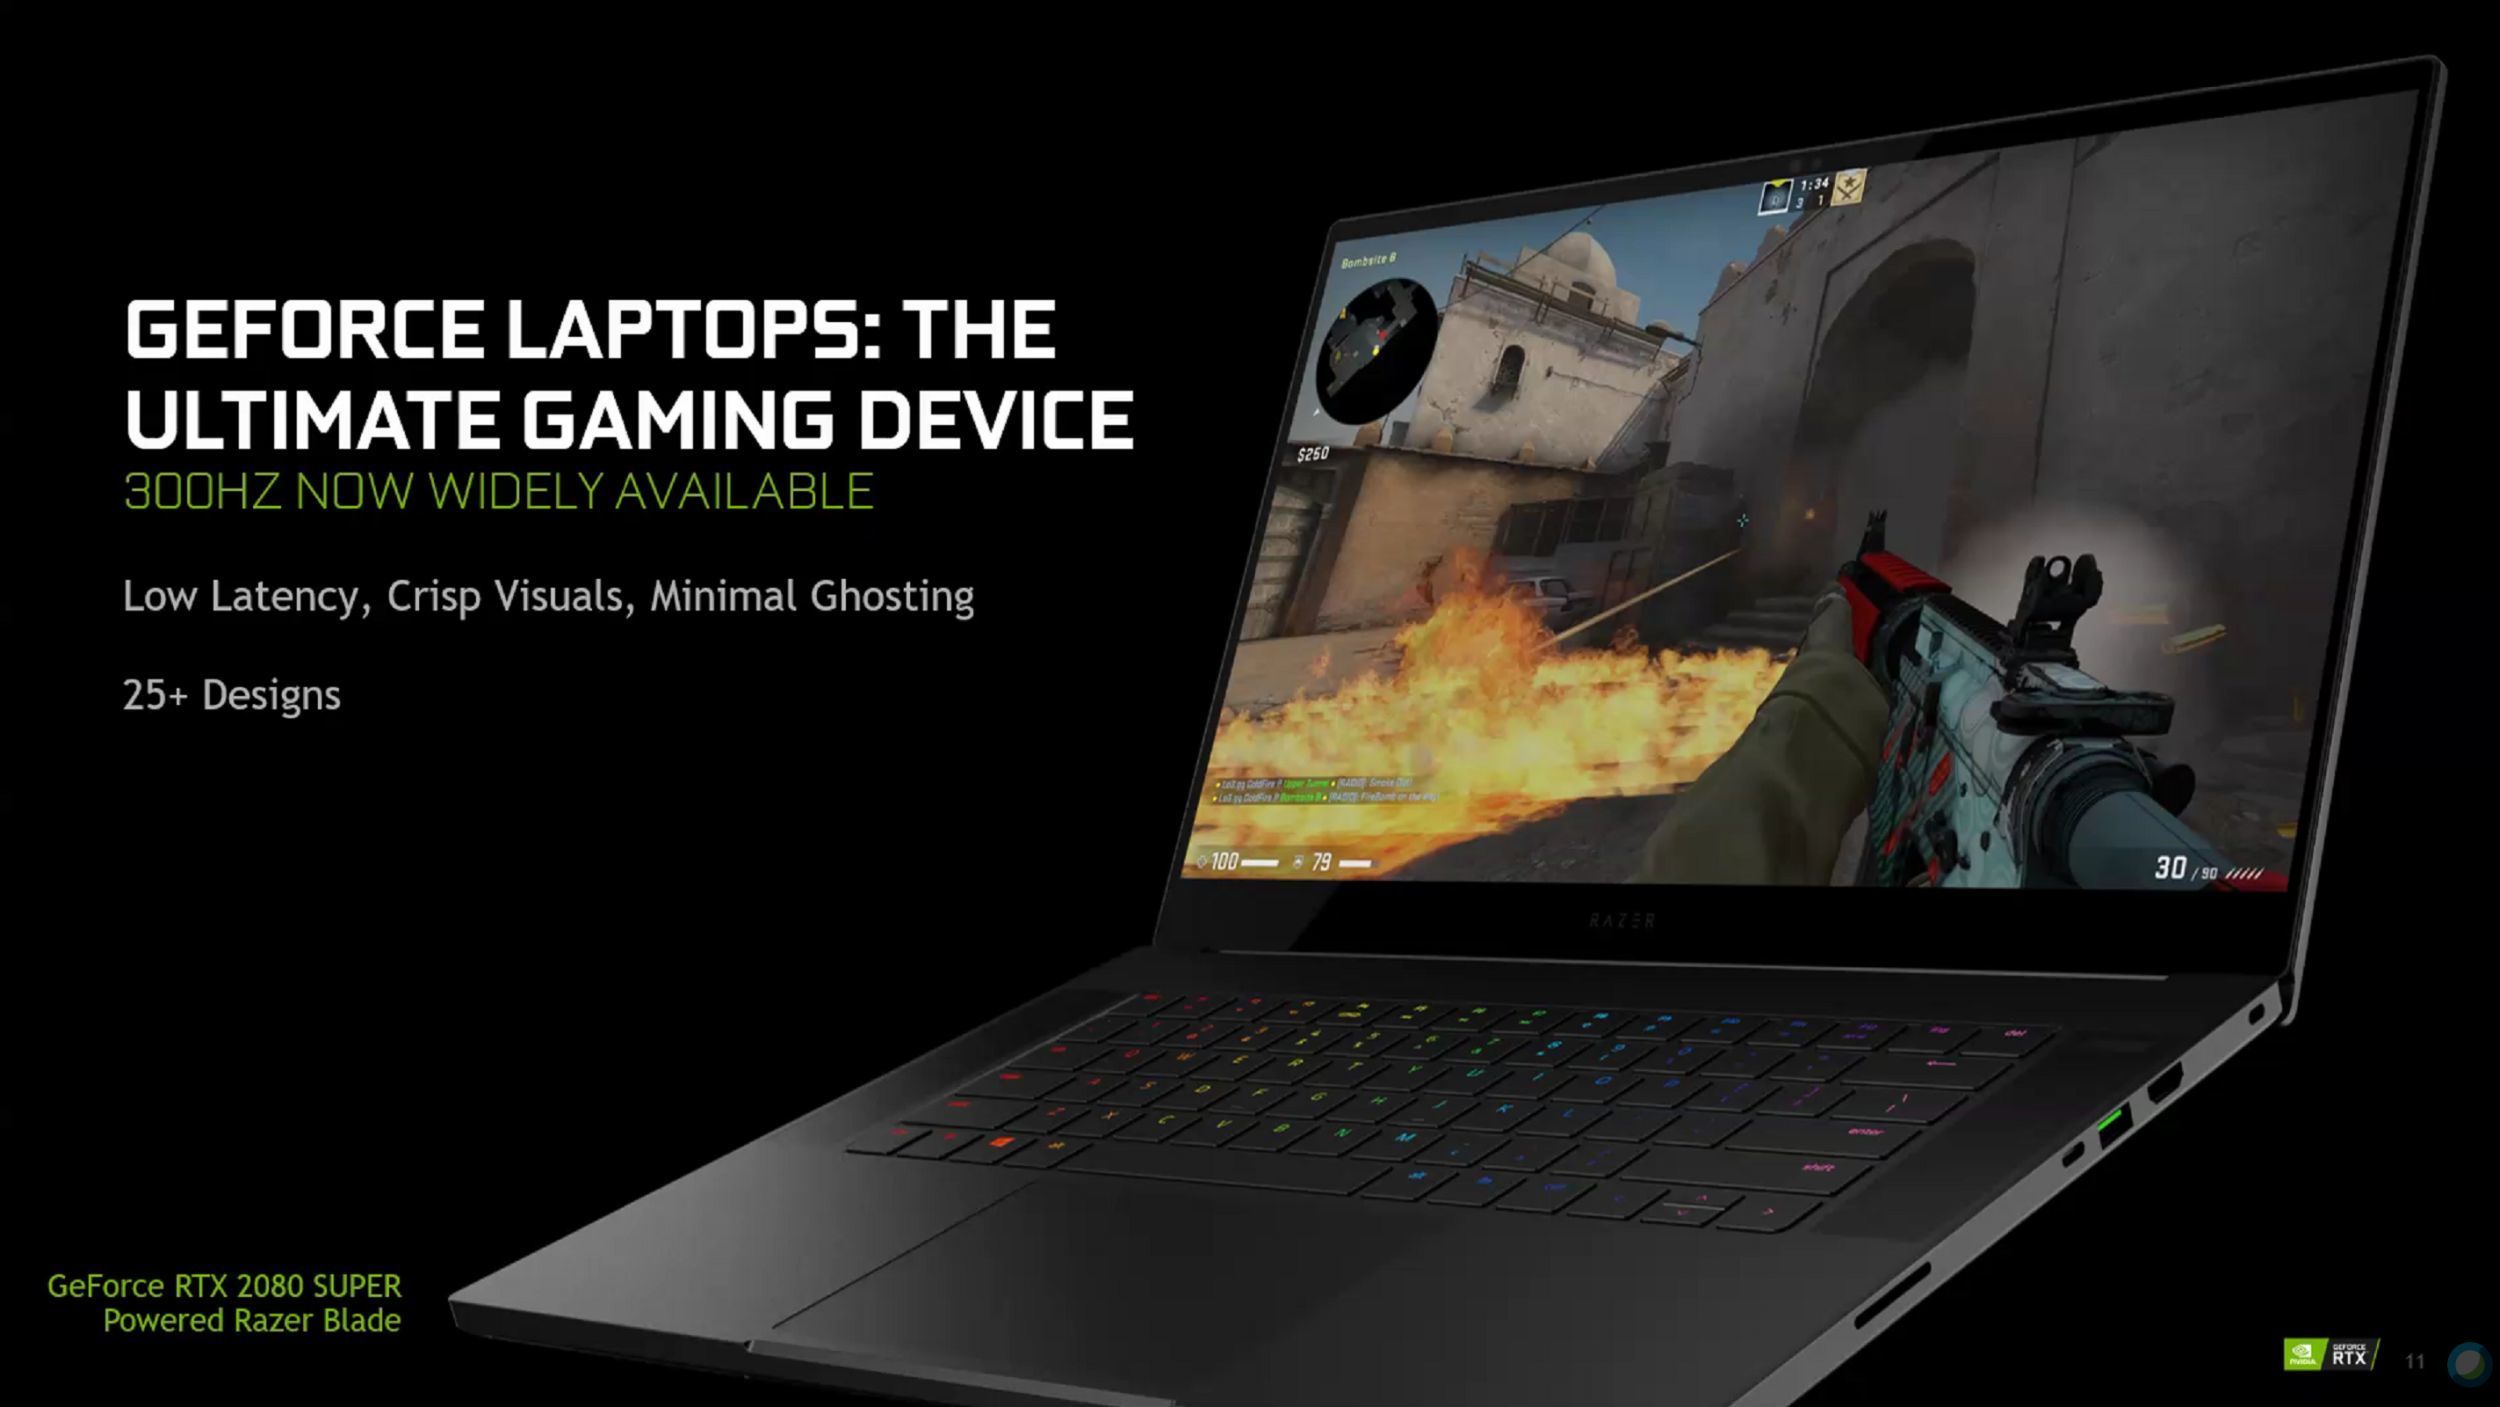 Nvidia levels up GeForce gaming laptops: RTX Super GPUs, Max-Q